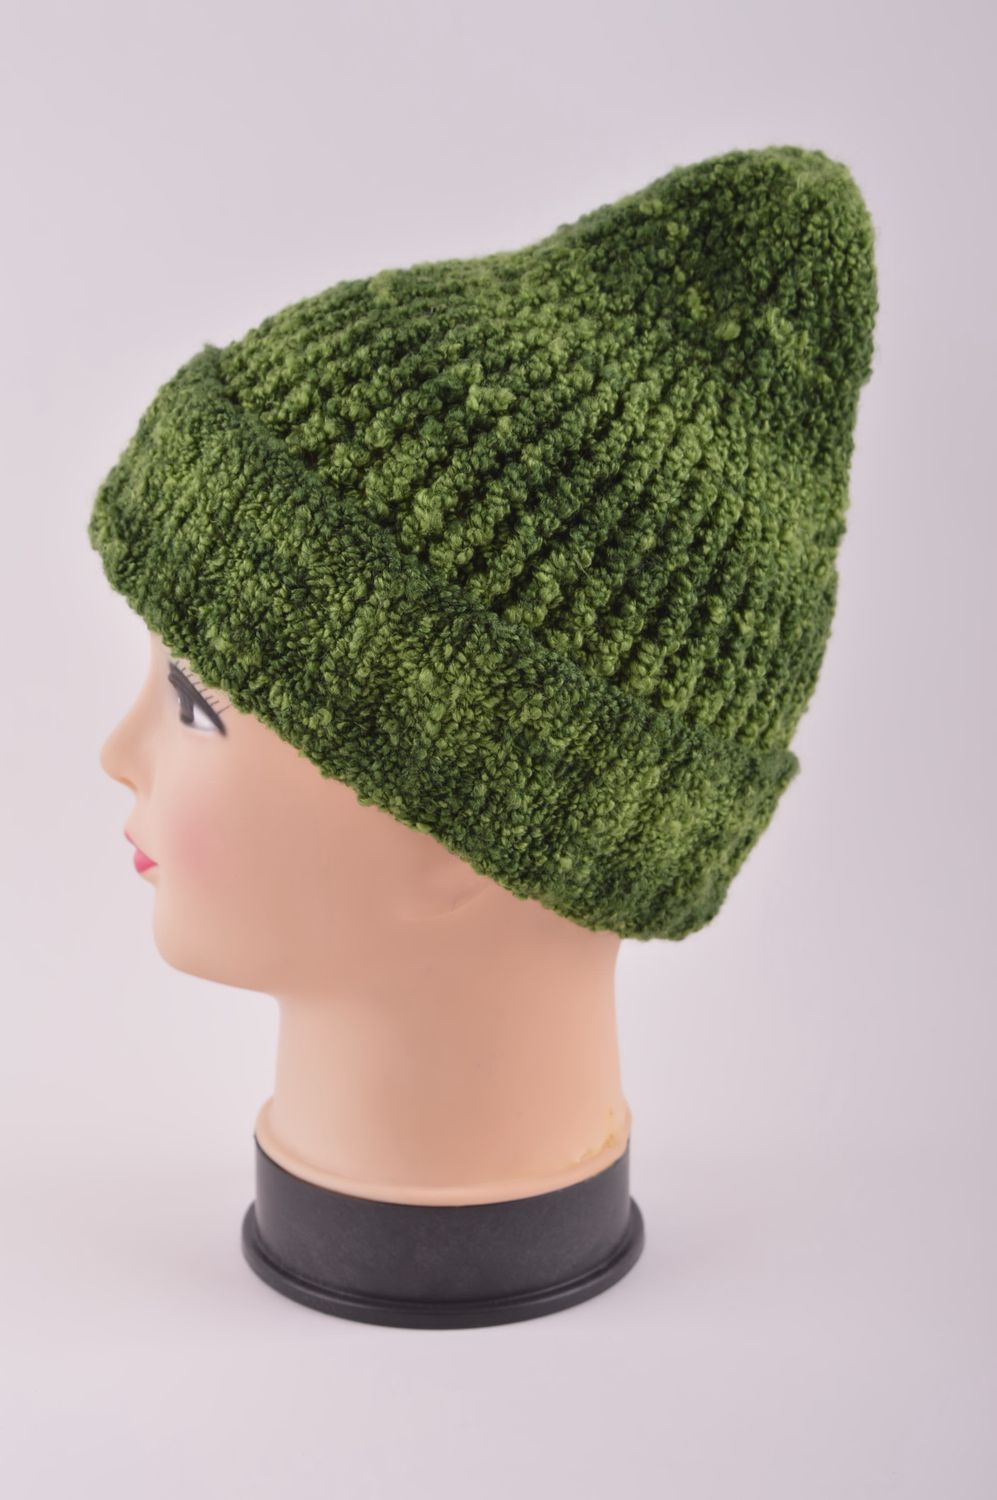 Handmade knitted hat winter hat for women winter hat winter accessories photo 3